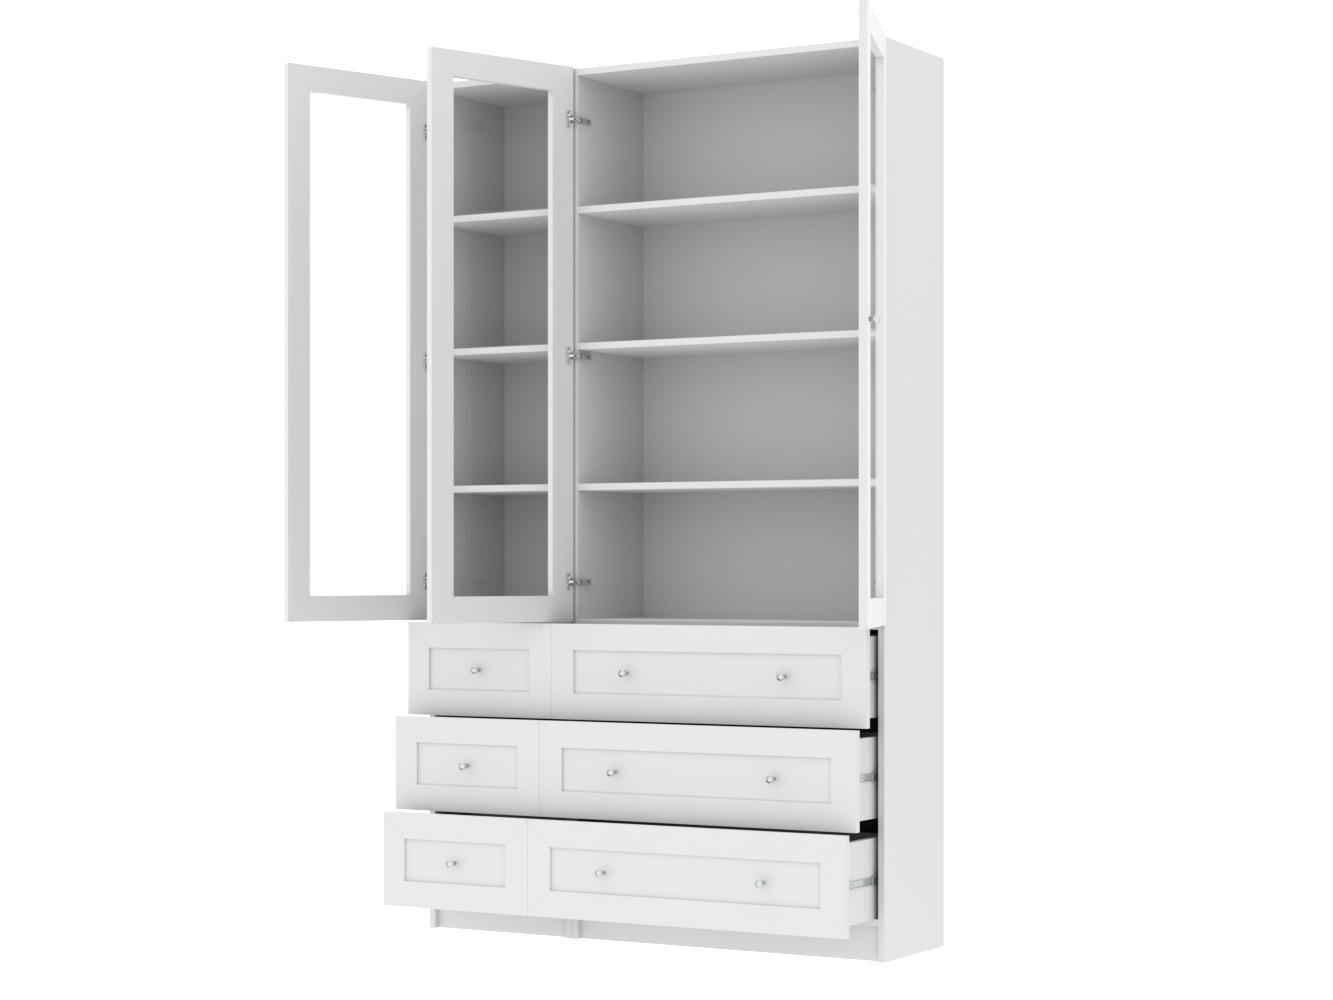  Книжный шкаф Билли 325 white ИКЕА (IKEA) изображение товара